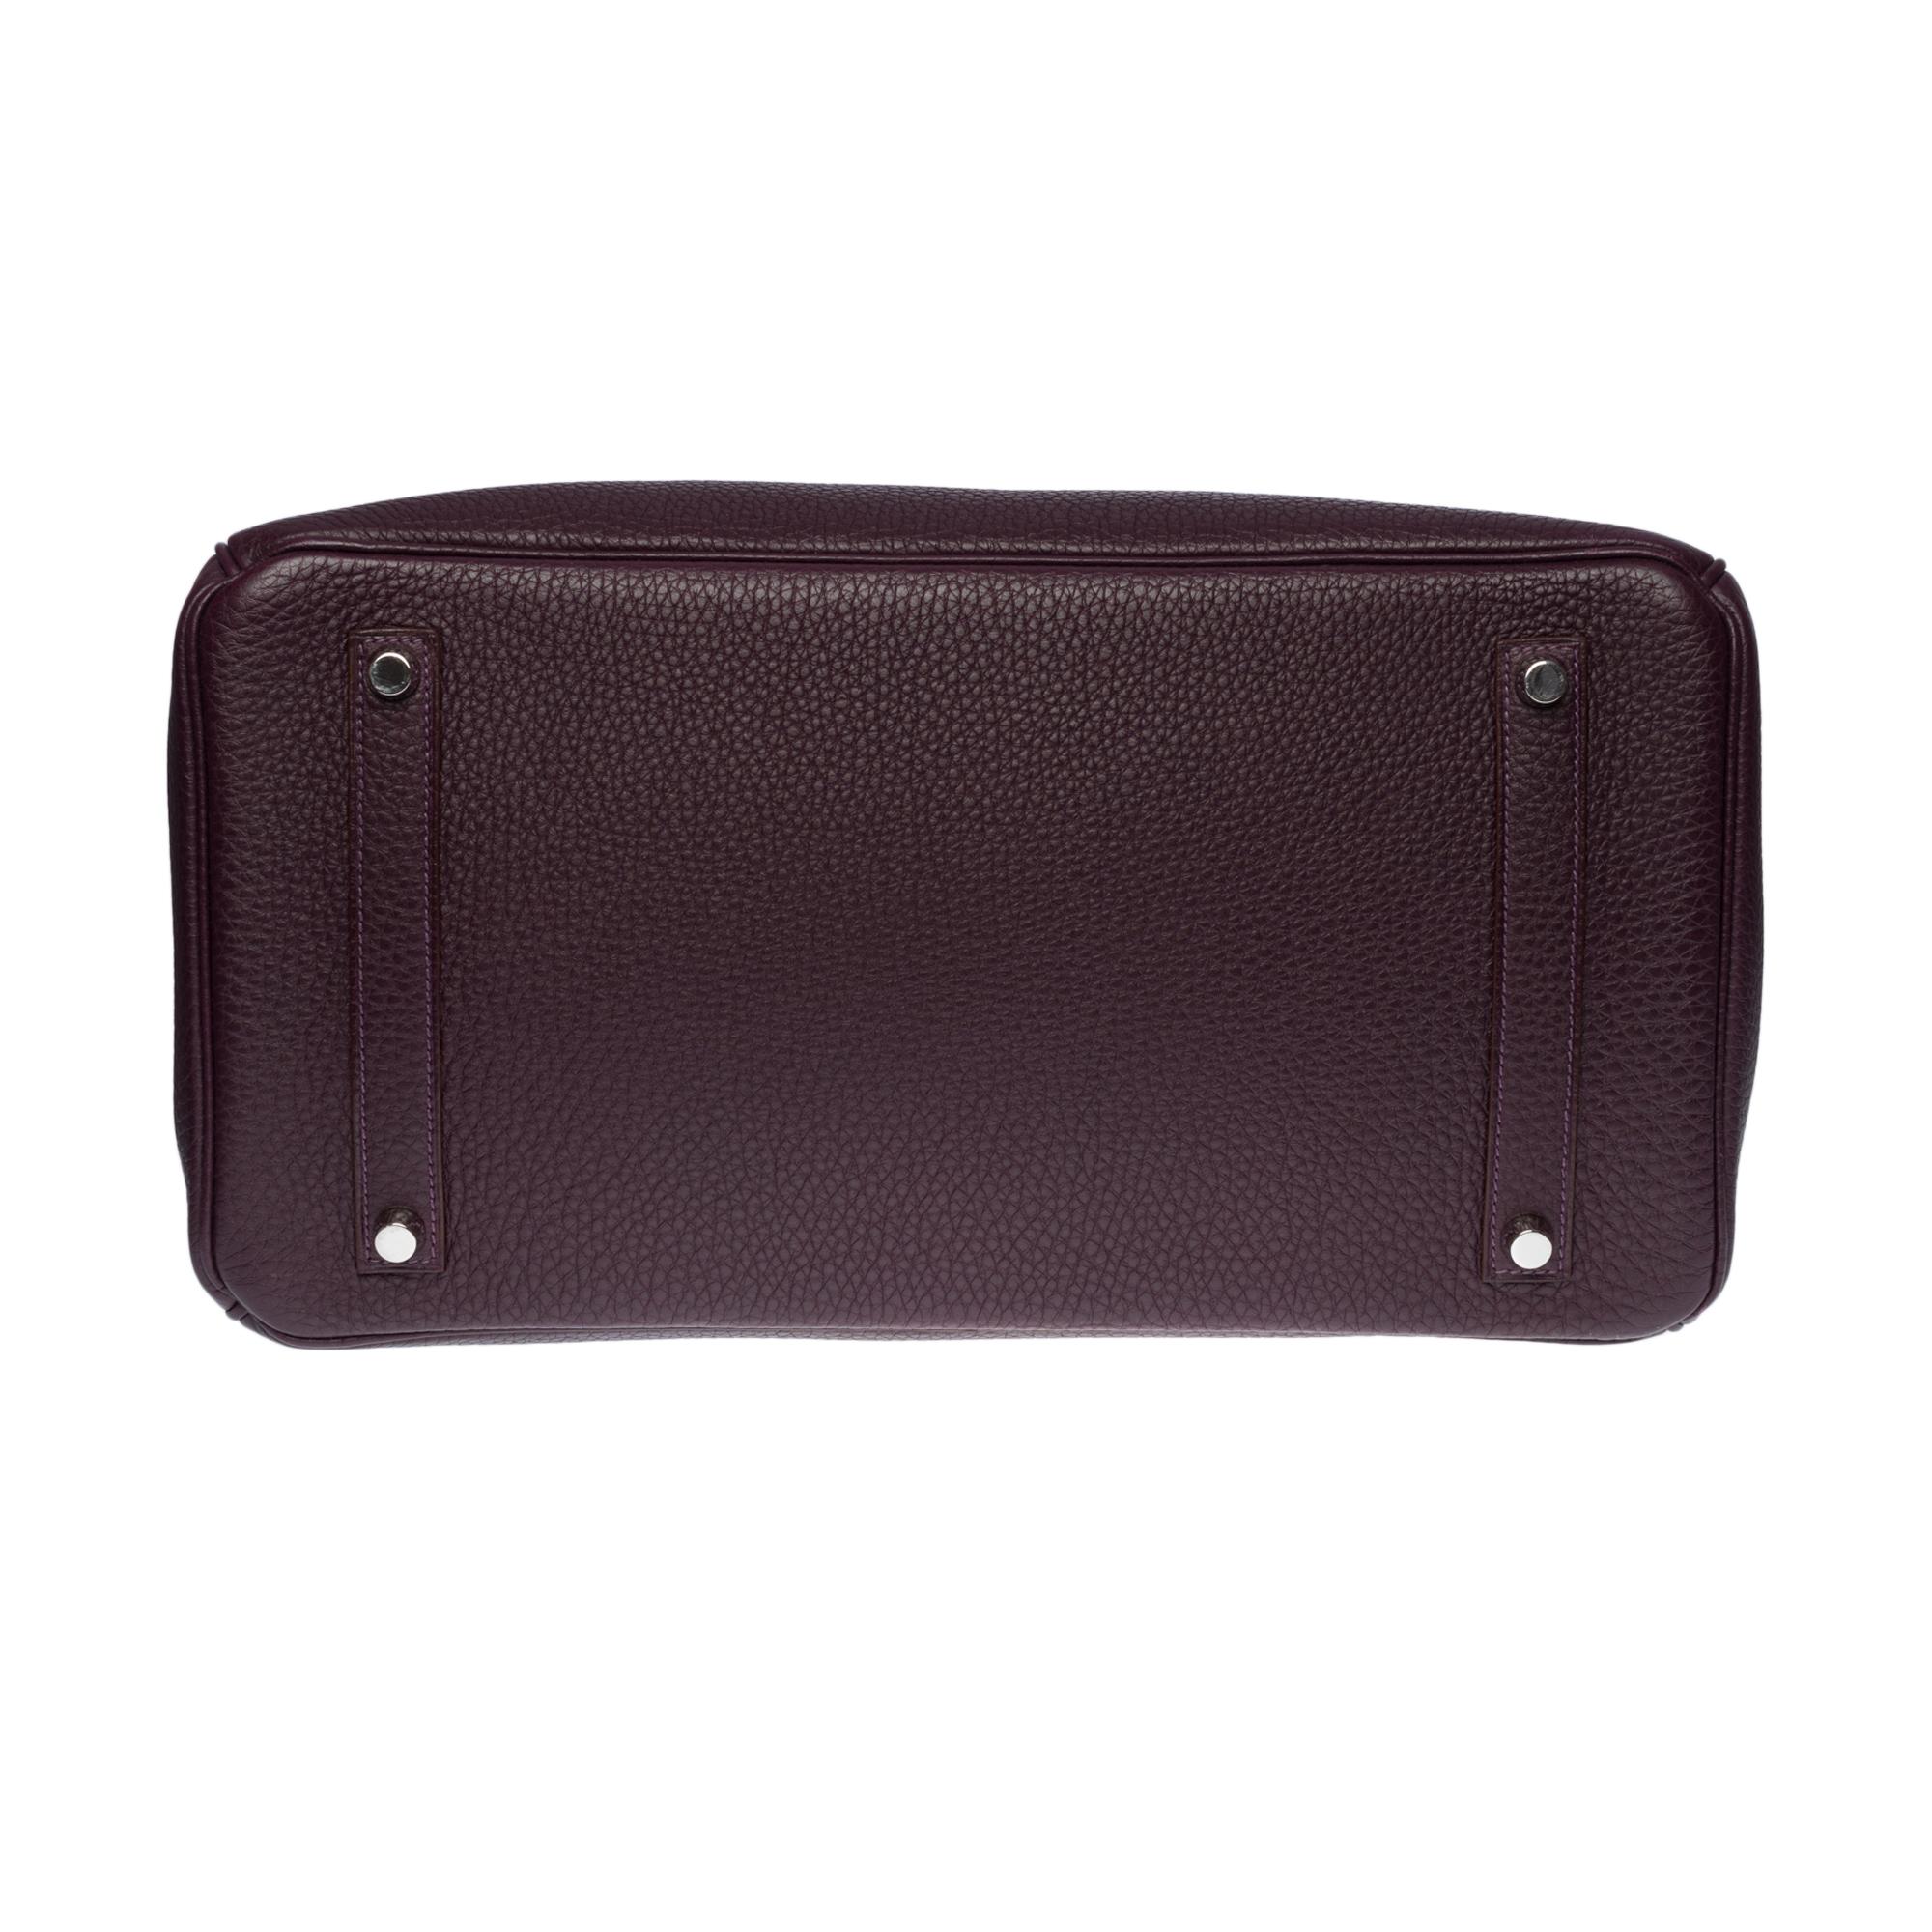 Amazing Hermès Birkin 35 handbag in raisin Togo leather, SHW 4